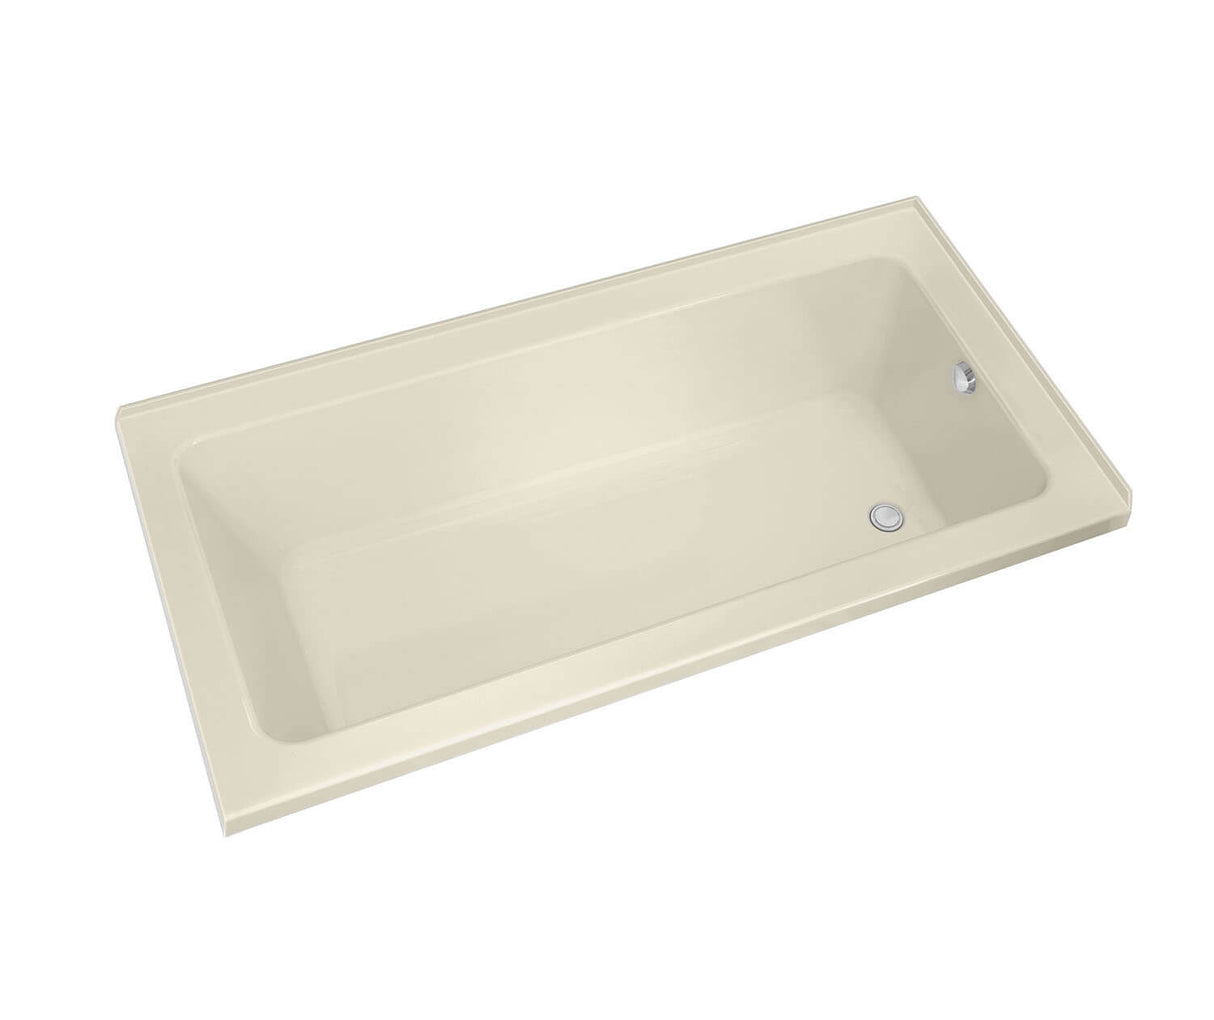 MAAX 106206-L-003-004 Pose 6632 IF Acrylic Corner Right Left-Hand Drain Whirlpool Bathtub in Bone